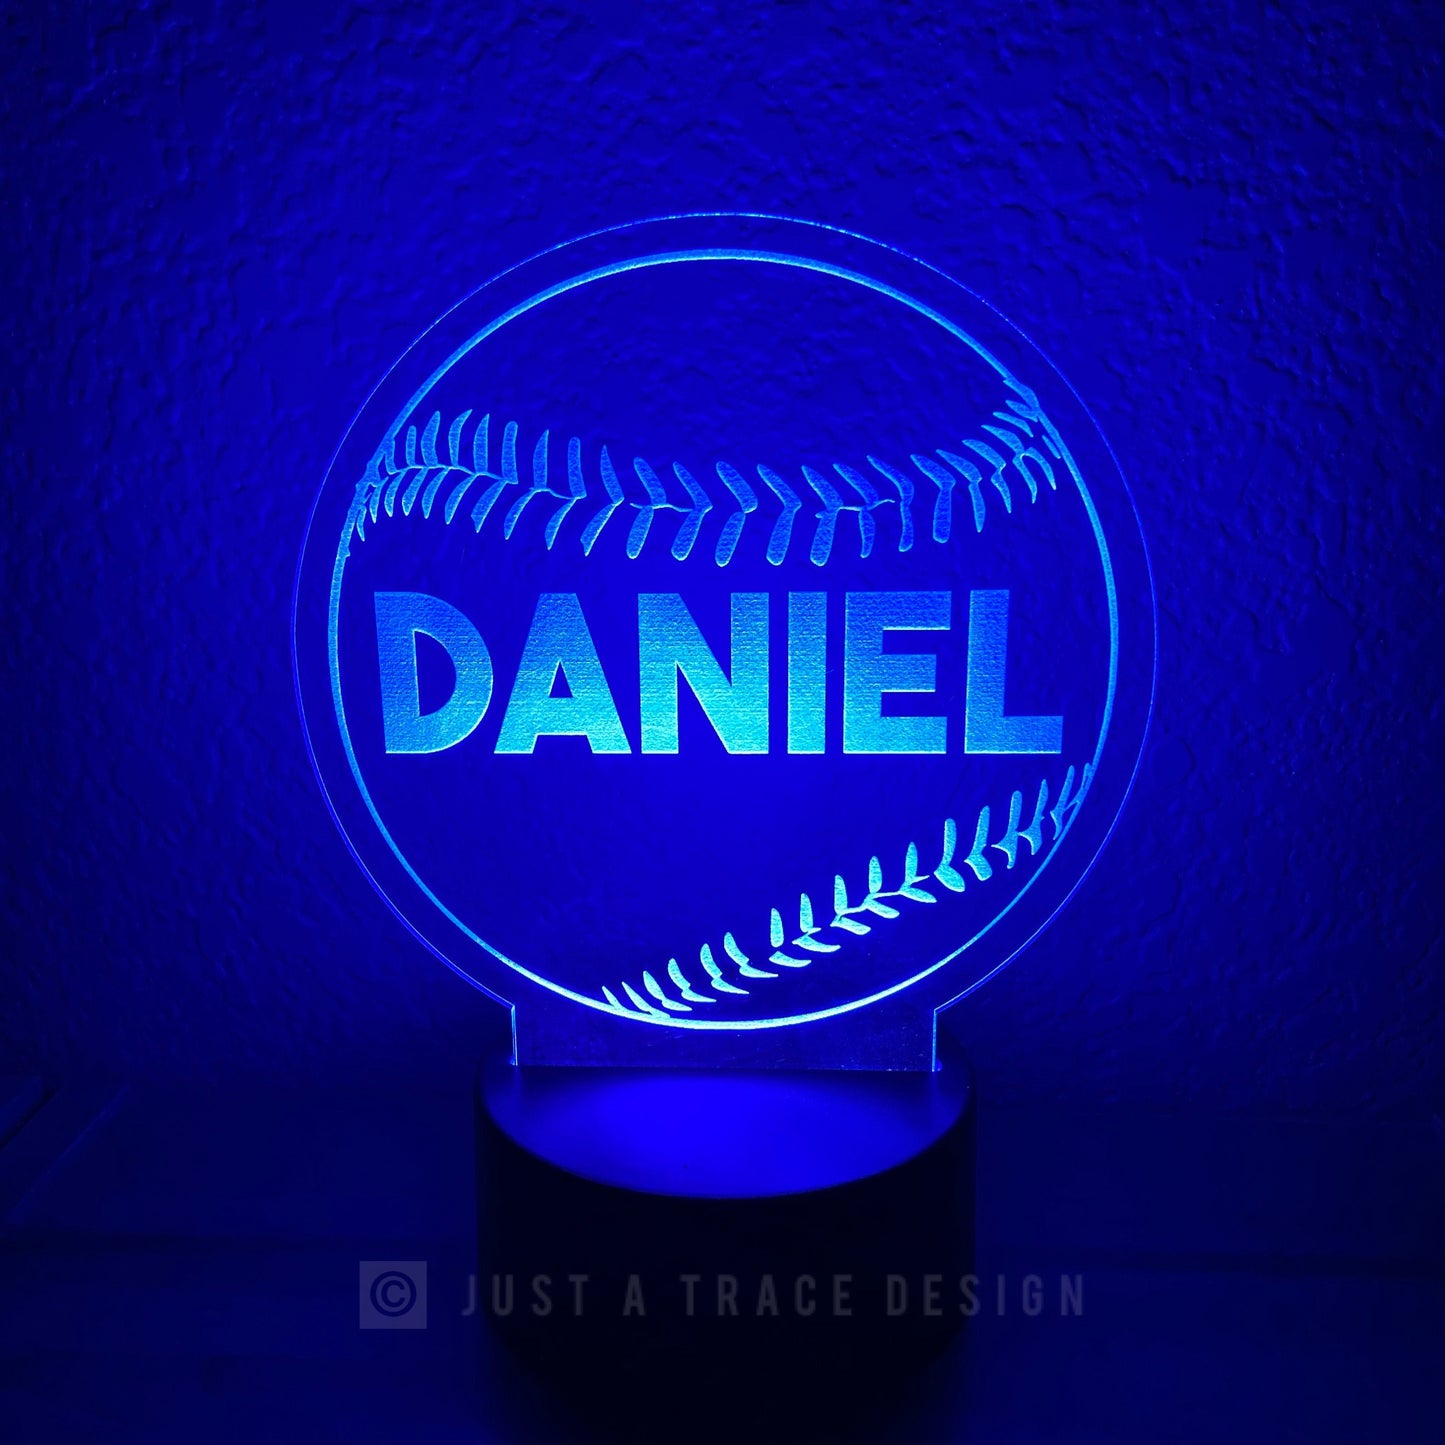 Baseball Personalized Night Light, Kids Night Light, Name Night Light, Sport Nightlight, Acrylic Nightlight, Laser Cut and Engraved